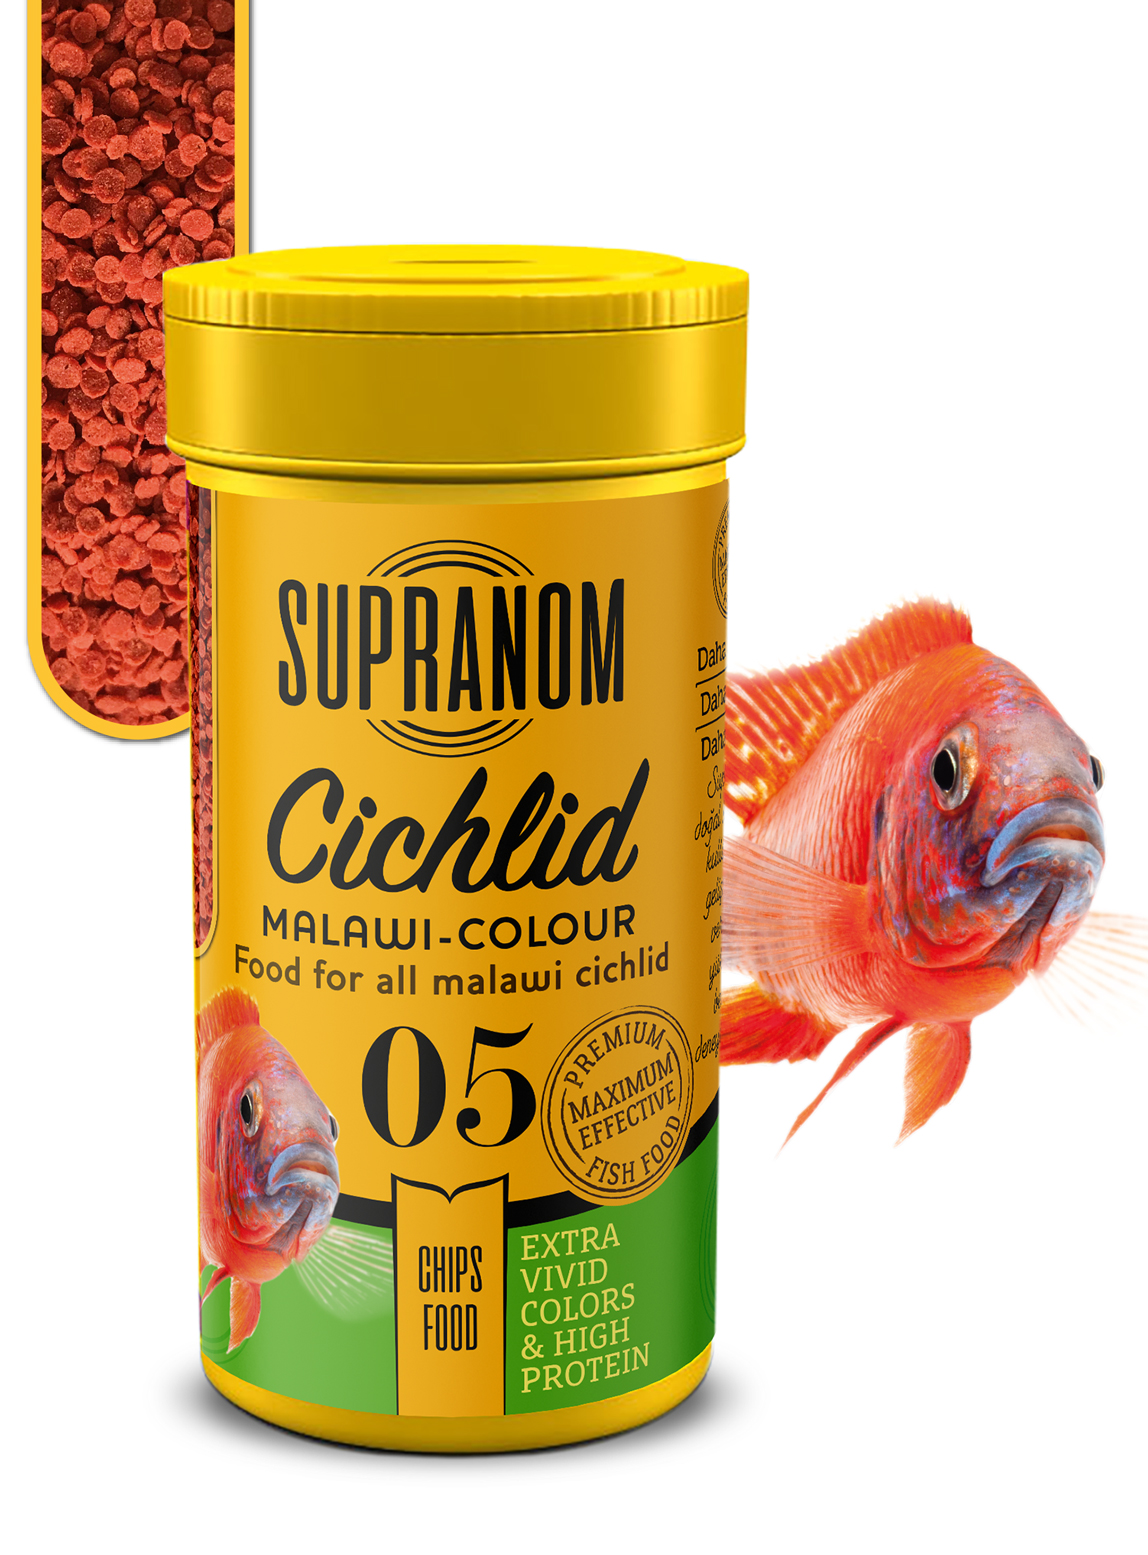 Supranom cichlid balık yemi malawi-colour chips food 100ml (05)-1